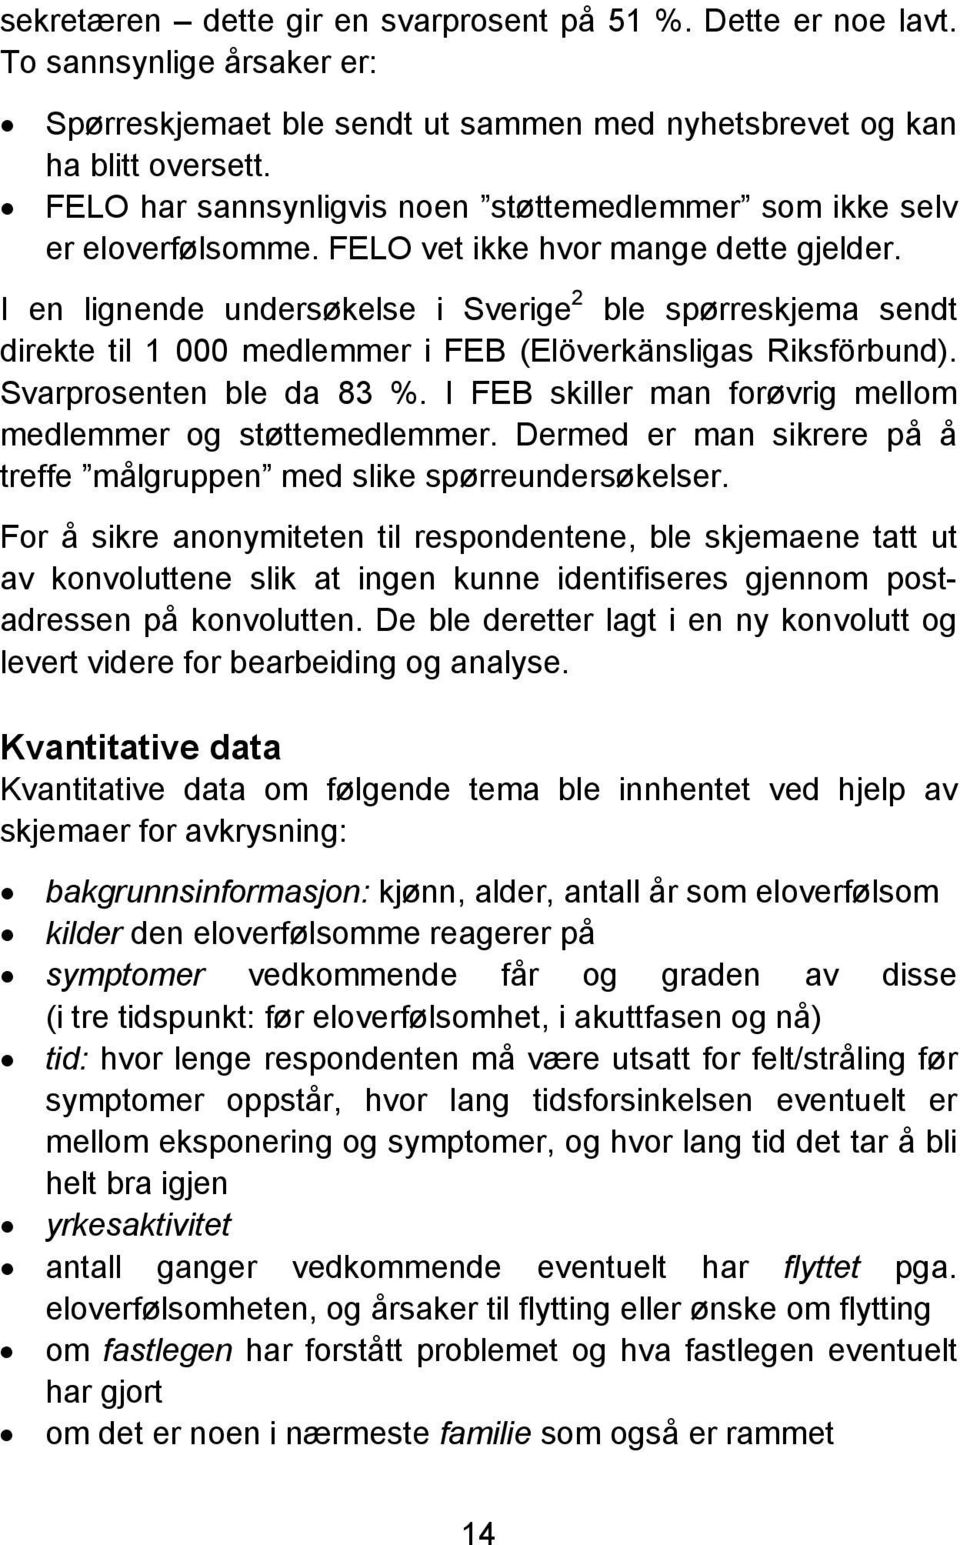 I en lignende undersøkelse i Sverige 2 ble spørreskjema sendt direkte til 1 000 medlemmer i FEB (Elöverkänsligas Riksförbund). Svarprosenten ble da 83 %.